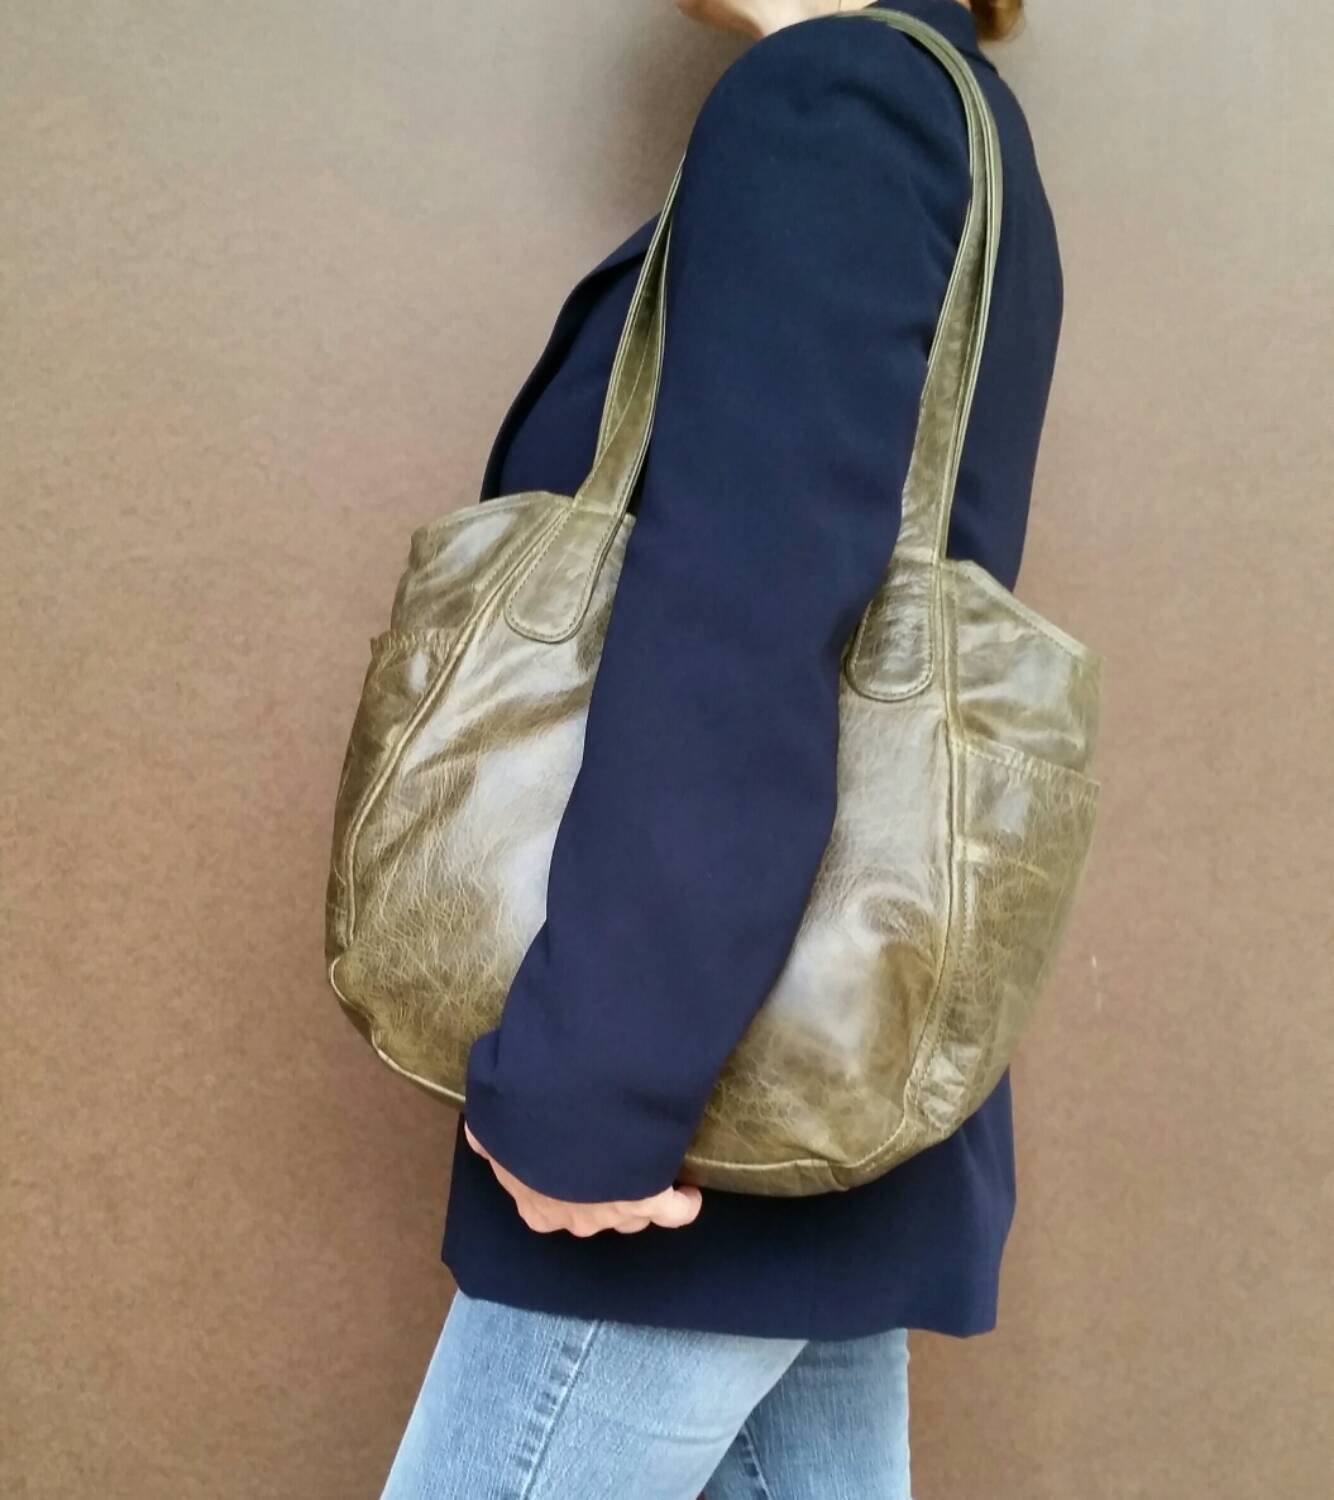 Distressed bag vintage leather preppy purse travel bag by Fgalaze